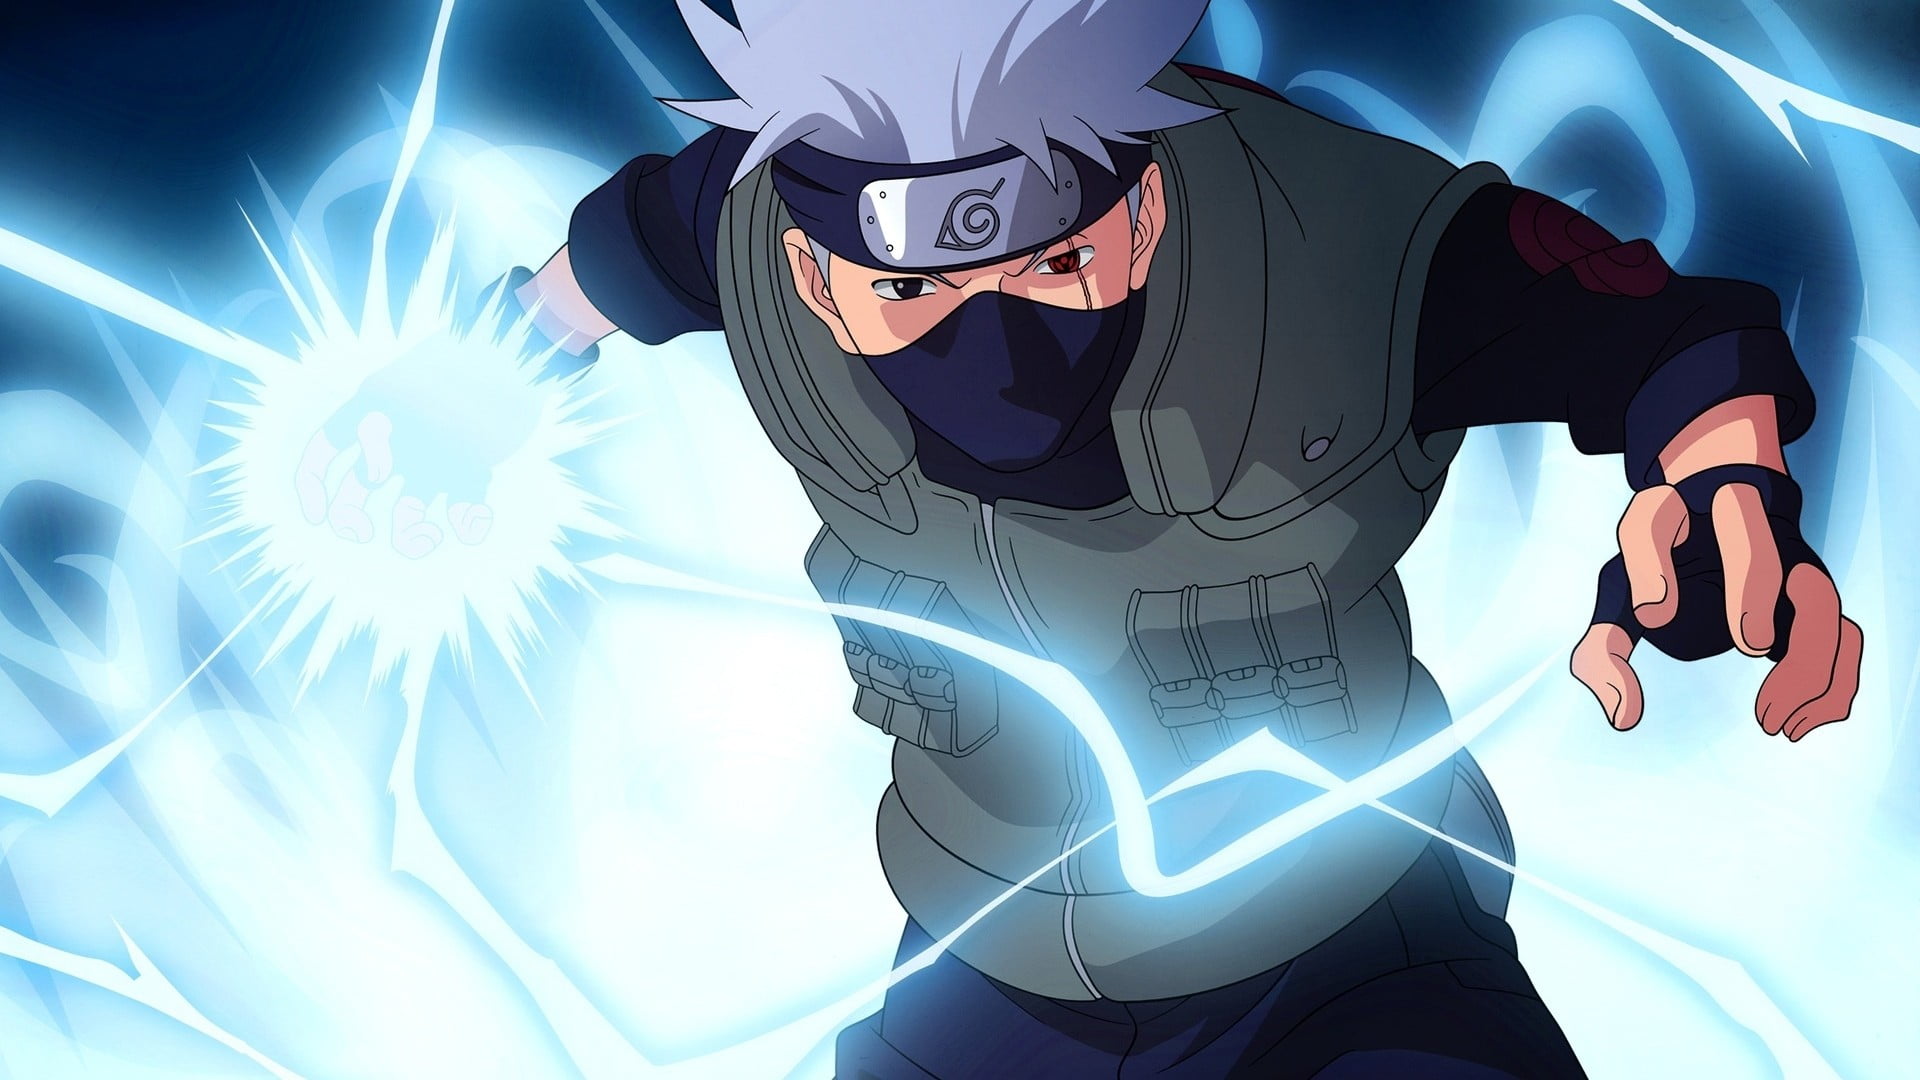 Kakashi Lightning Blade wallpaper, Naruto Shippuuden, anime, manga